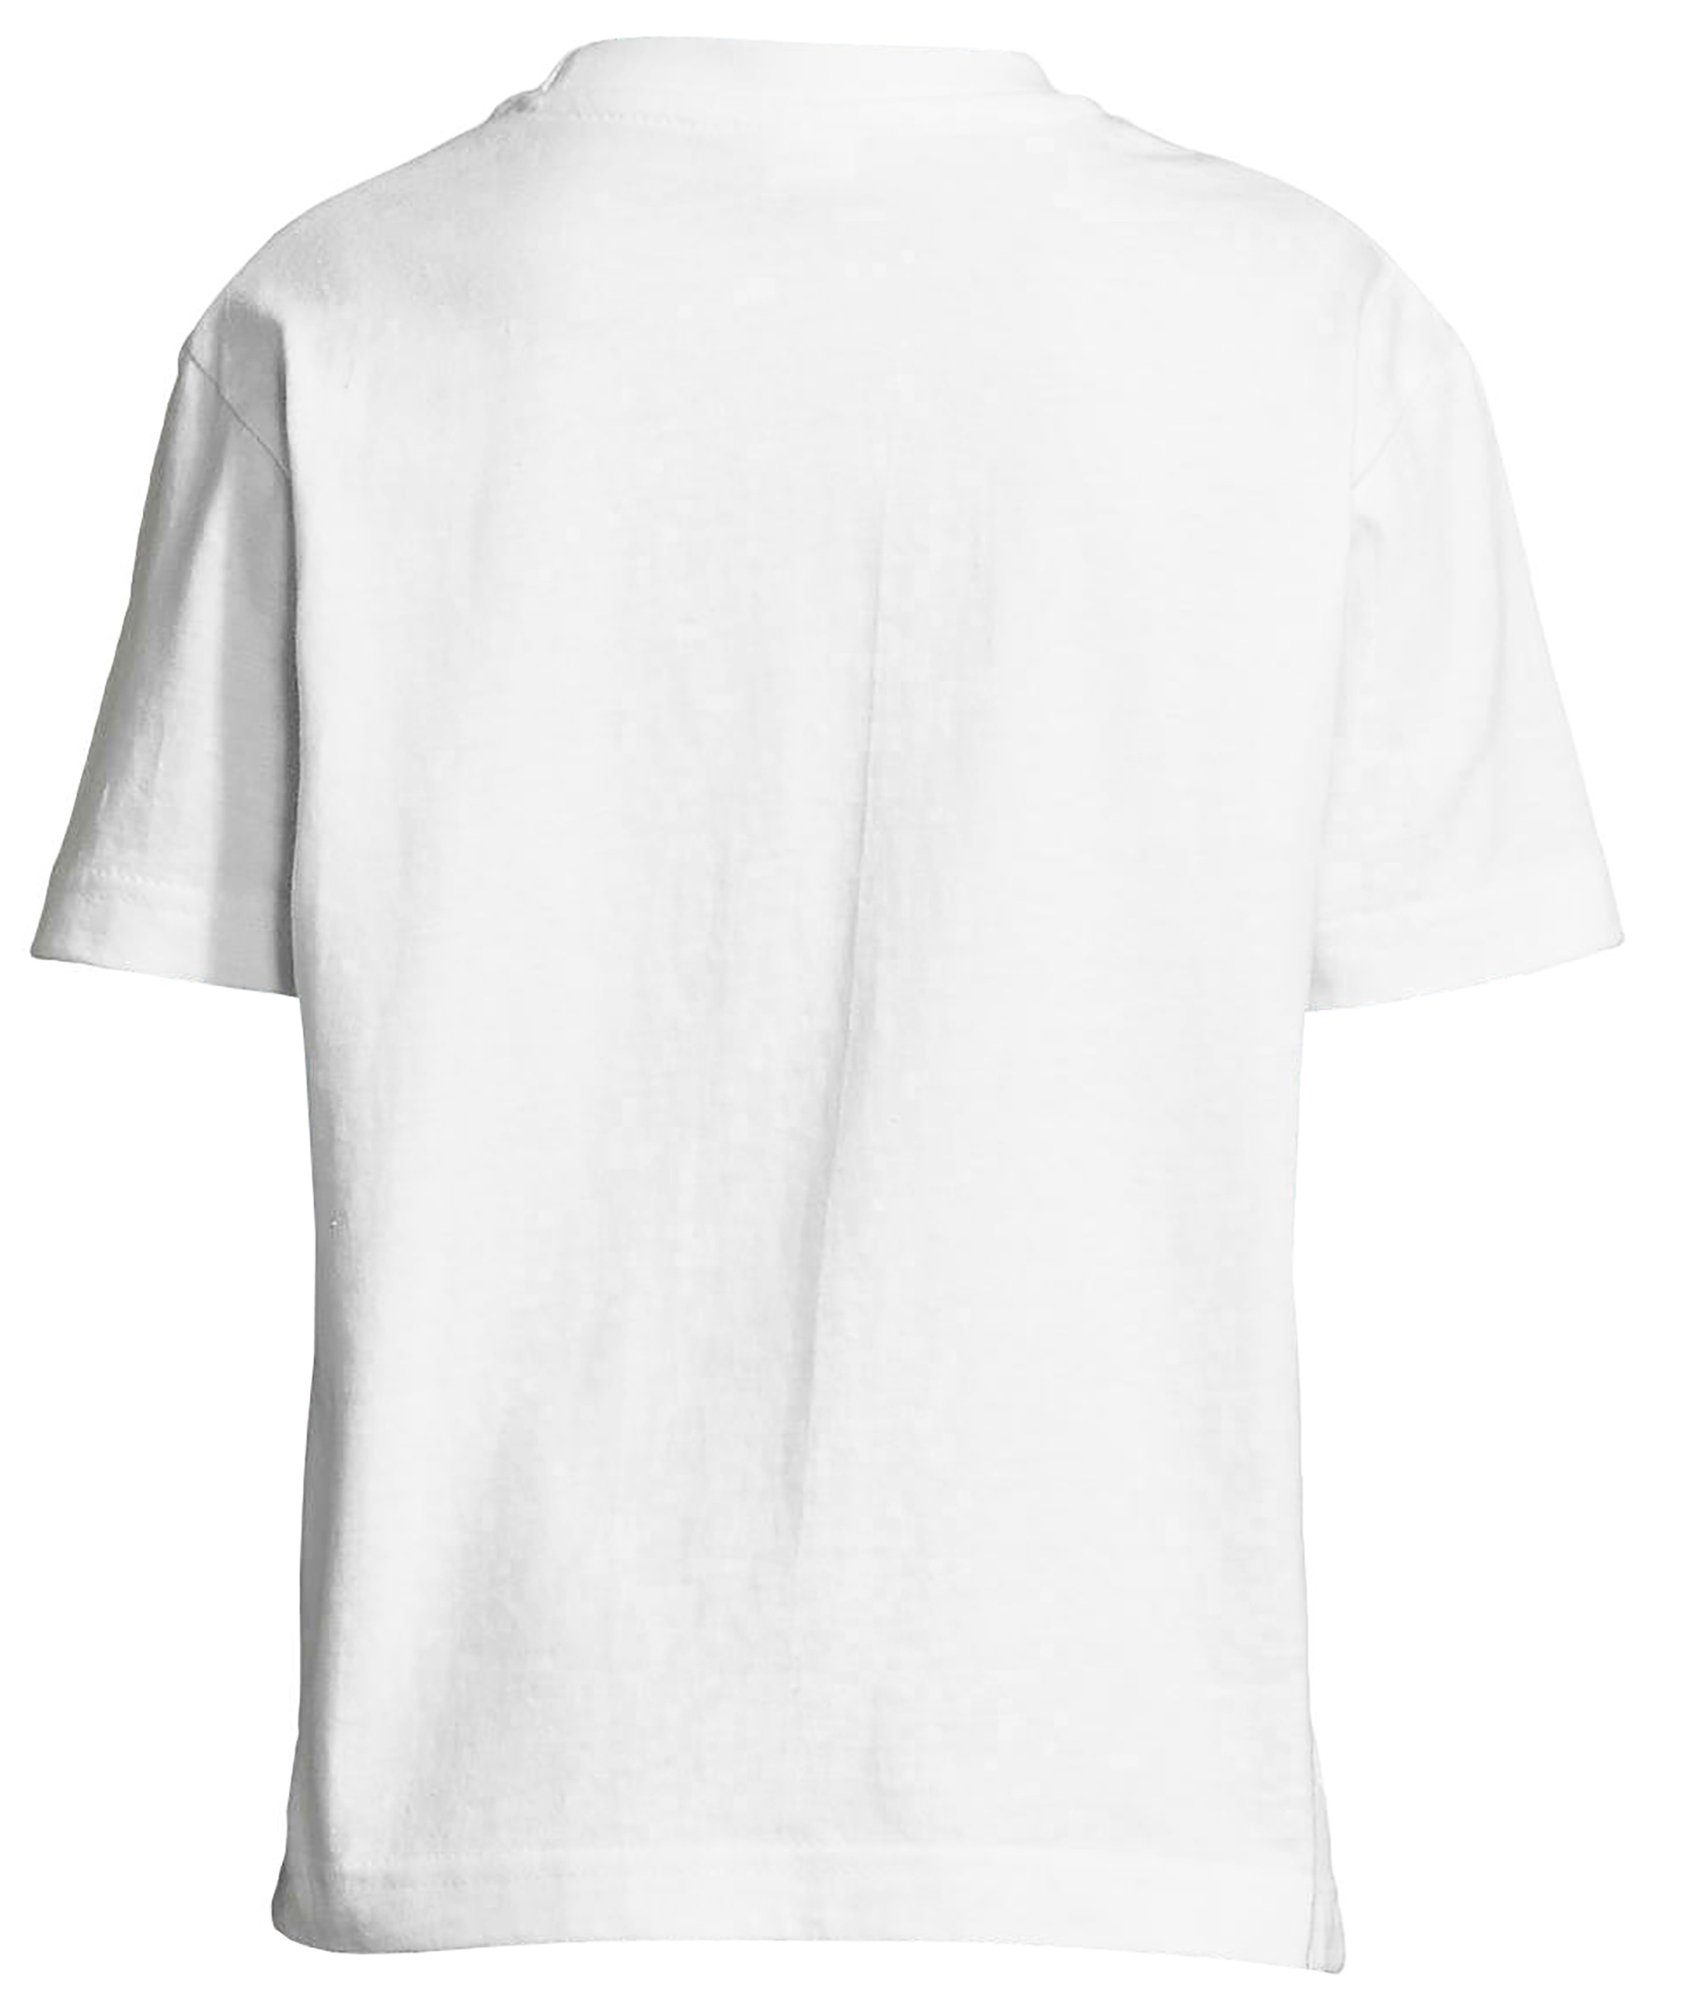 MyDesign24 Print-Shirt bedrucktes Mädchen berittenes Pferd Baumwollshirt mit i138 Aufdruck, T-Shirt weiss